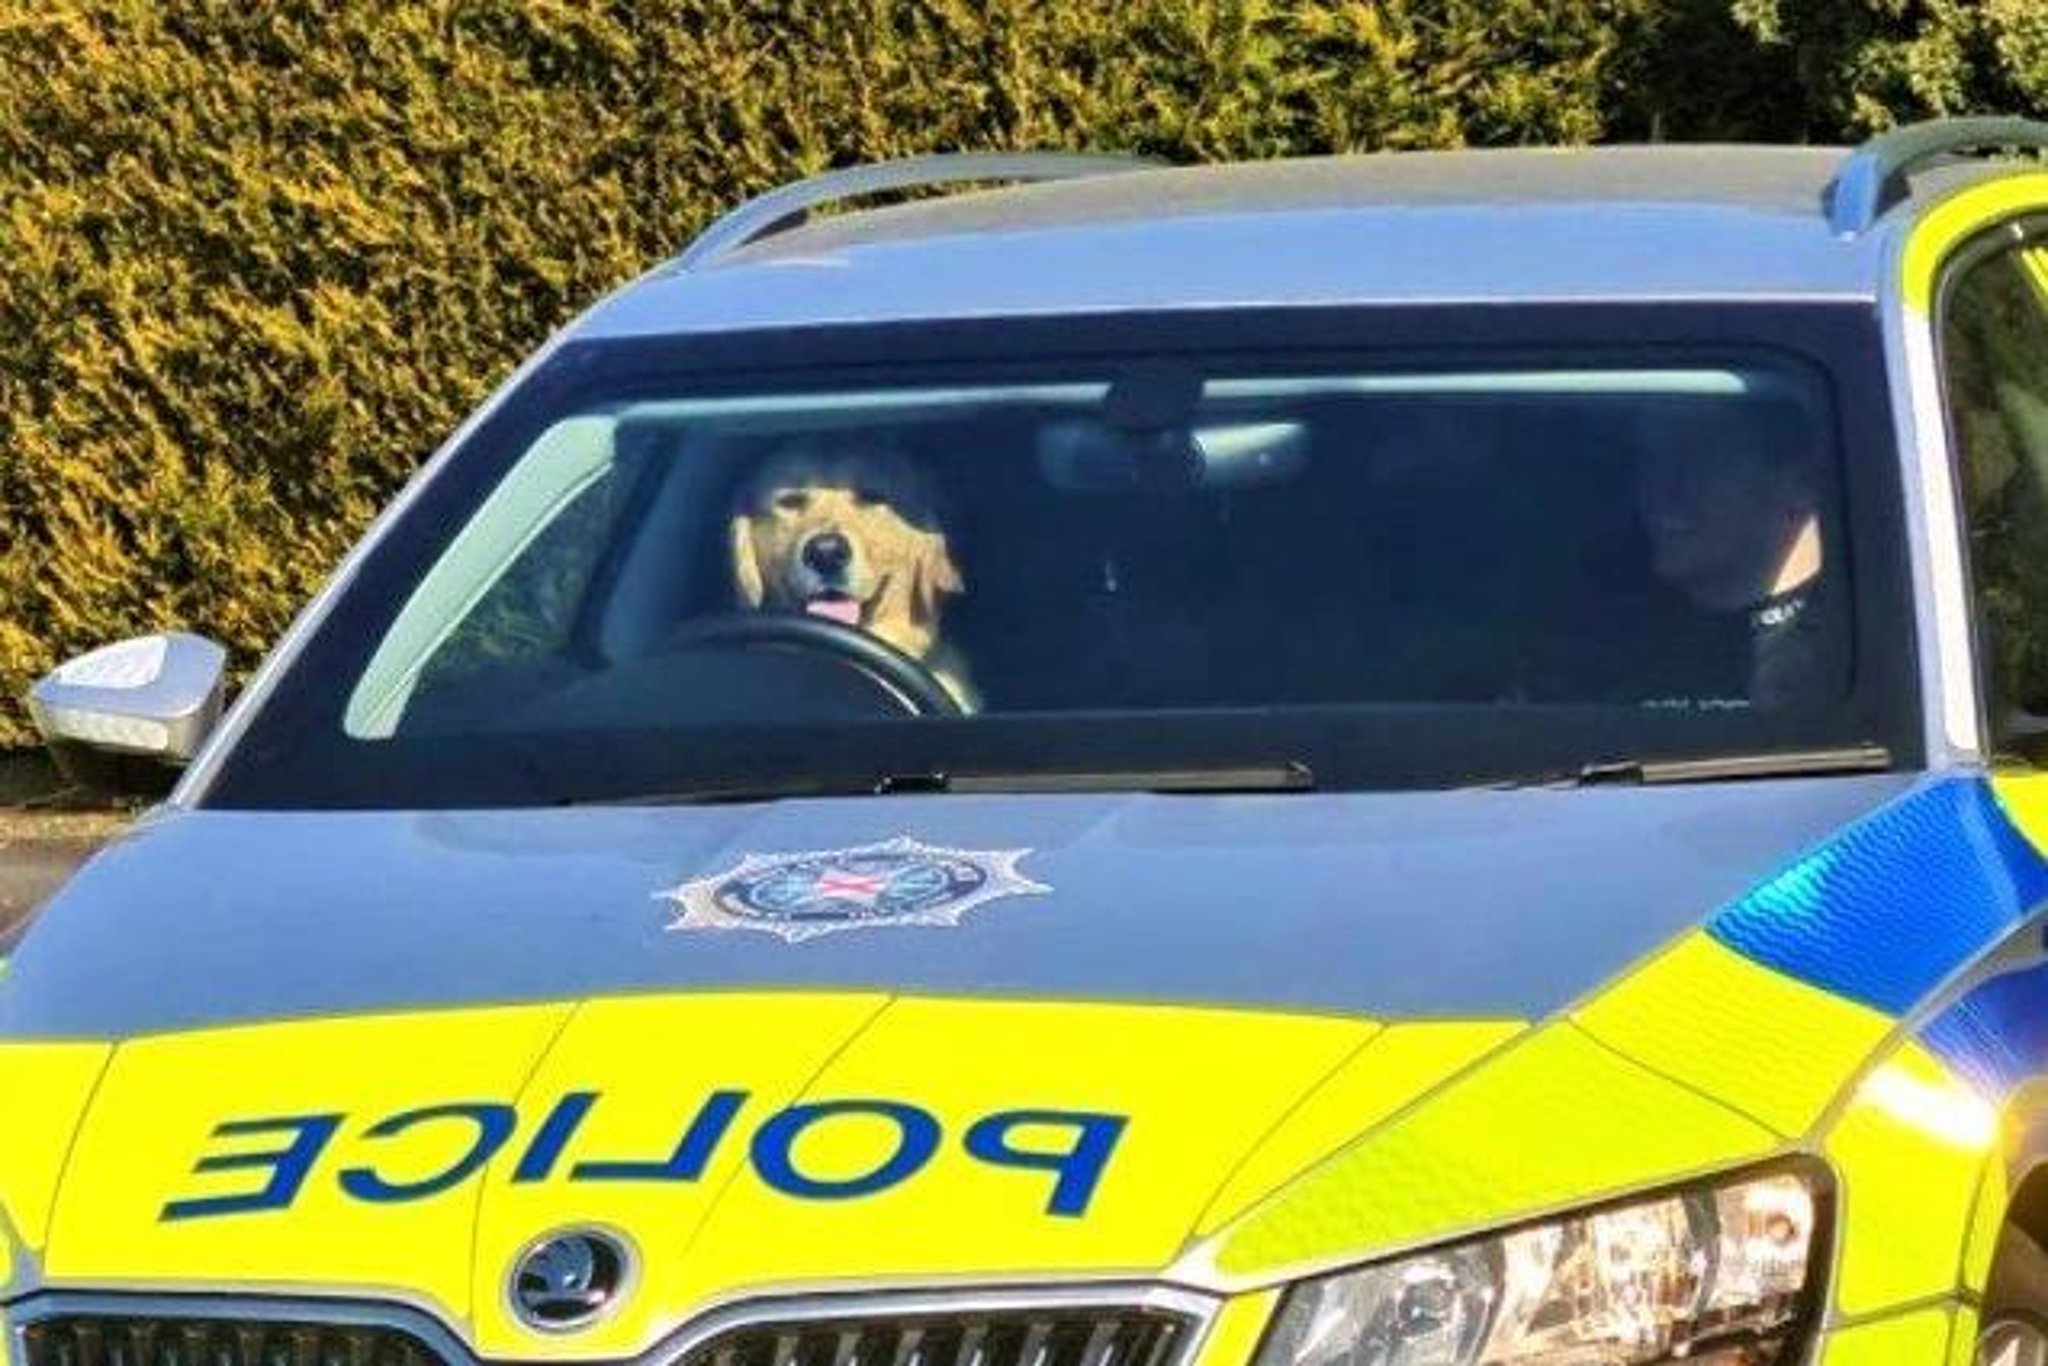 Dog detained 'on motoring offences' say PSNI in spoof arrest posting